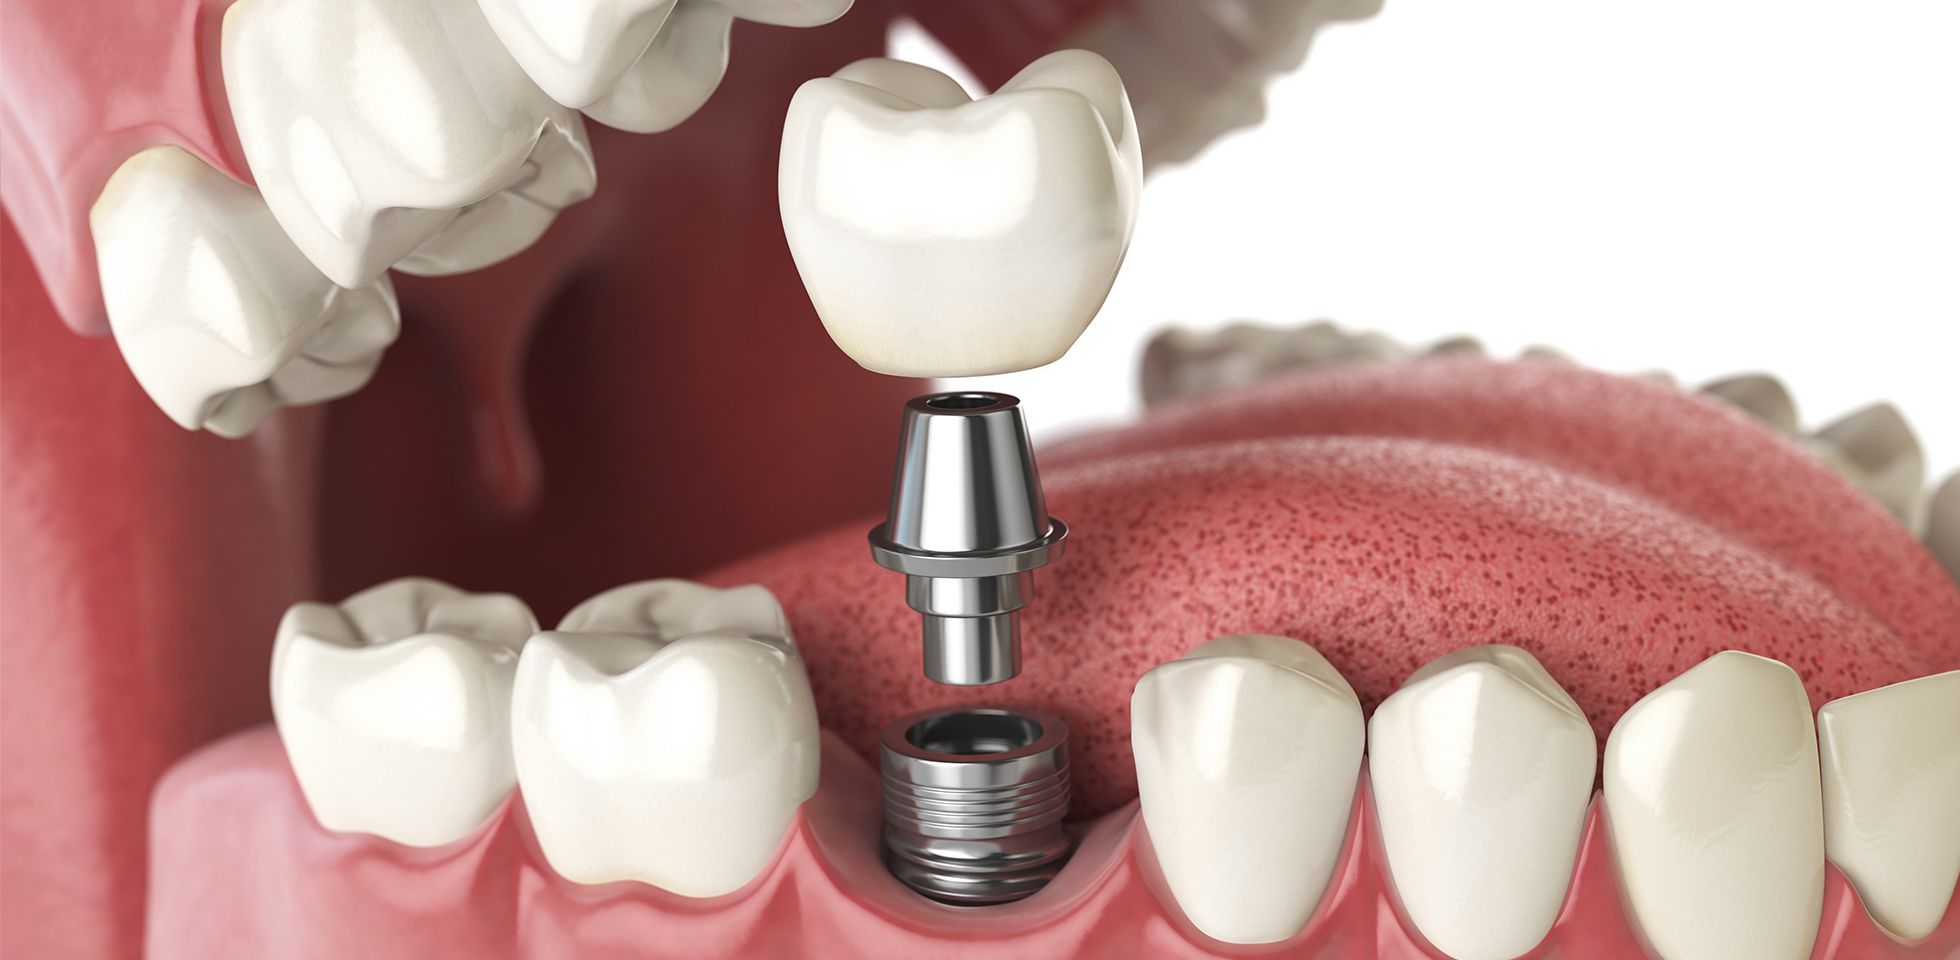 All-On-Four Dental Implants Explained